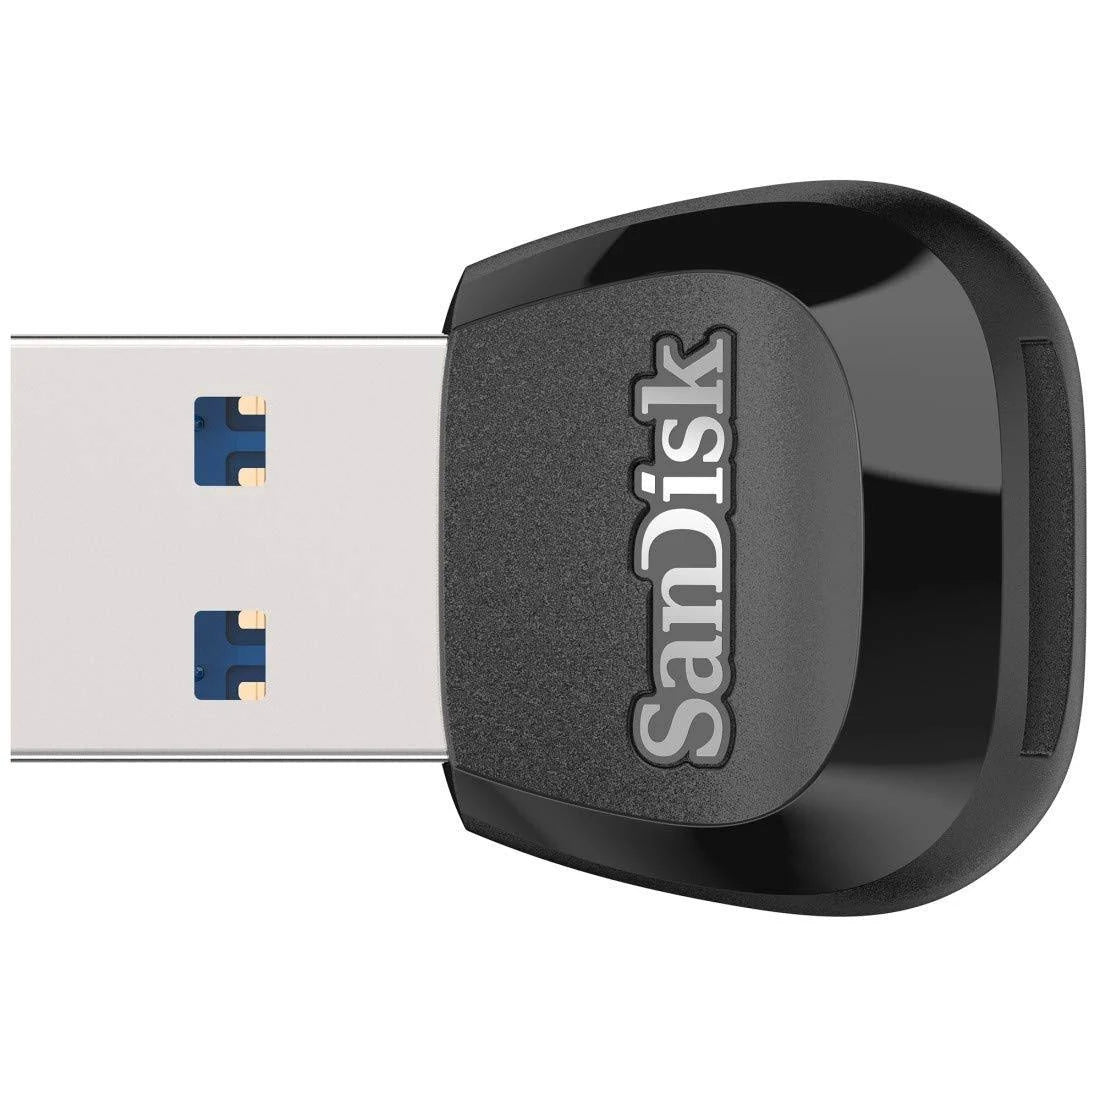 SanDisk USB 3.0 MICRO SD / MICRO SDHC UHS-I READER/WRITER